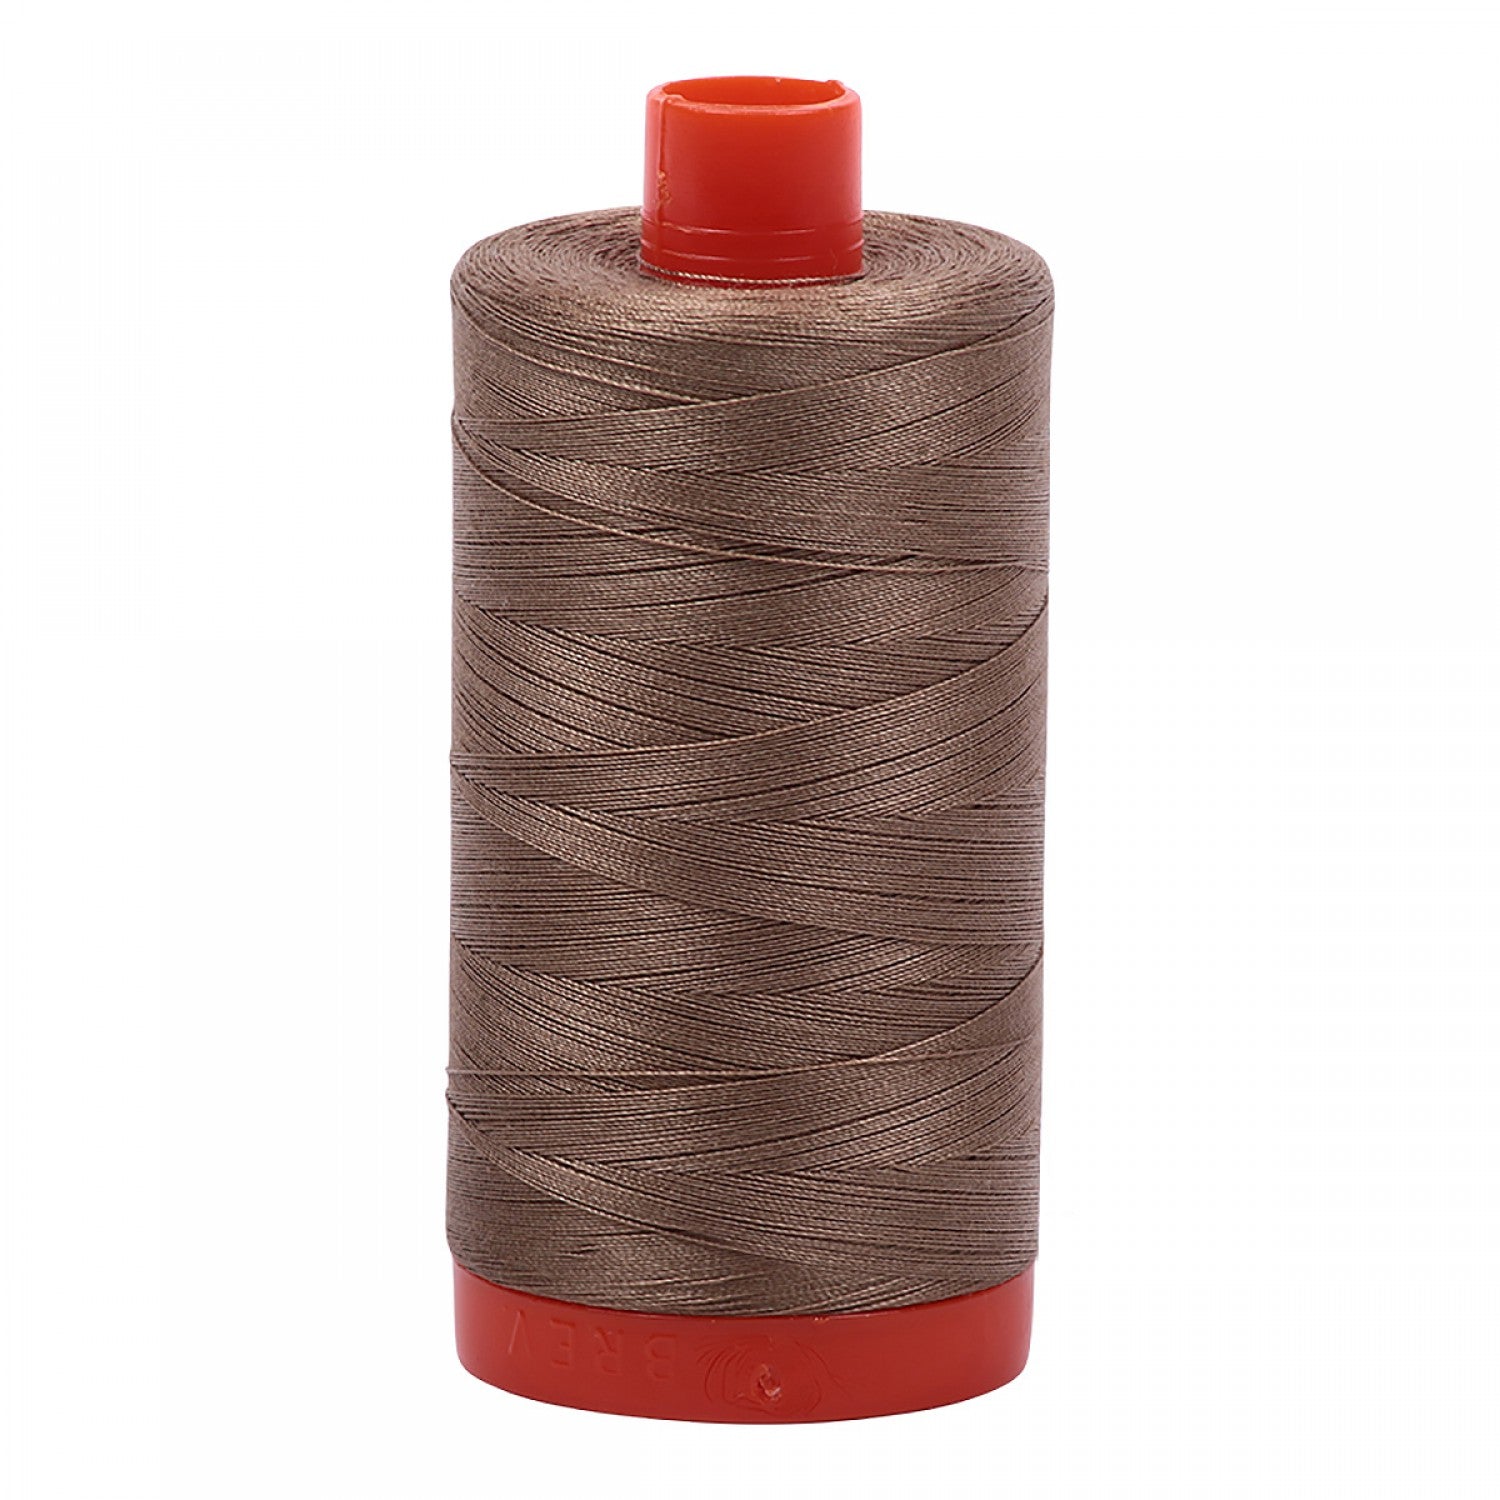 Aurifil Mako 50 wt Cotton Thread - 1422 yds - Sandstone (2370)